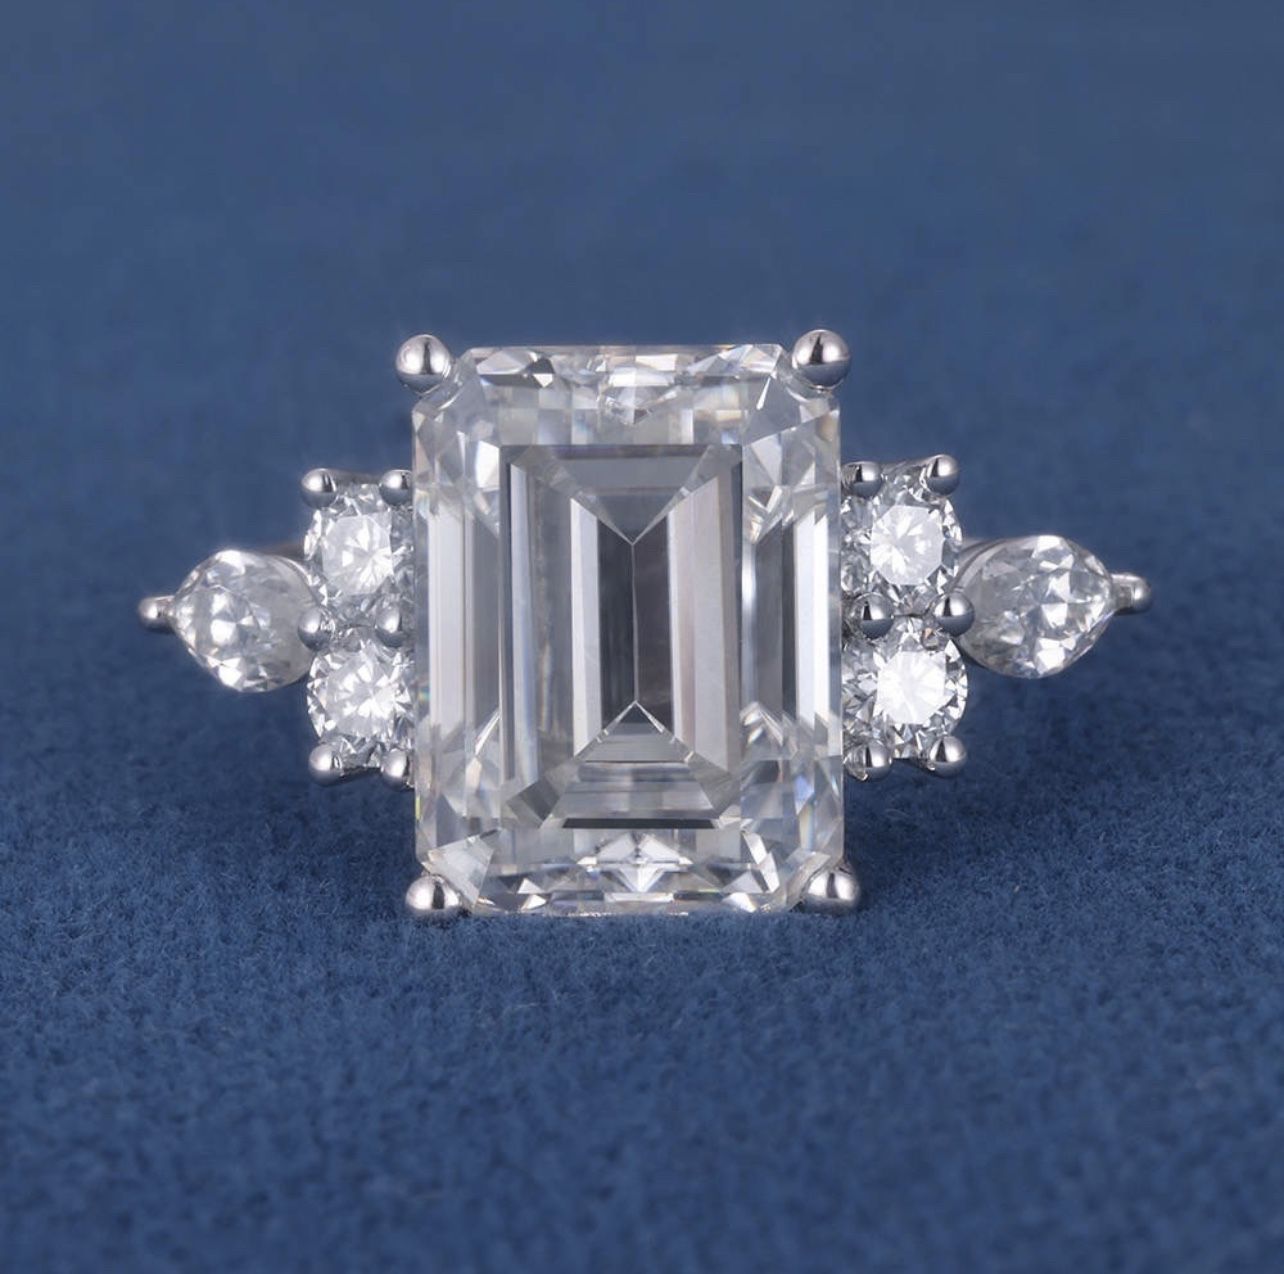 ✅6Carat Certified Emerald Cut 🔥Moissanite Diamond Engagement Ring 🔥Solid Platinum Size 6.5